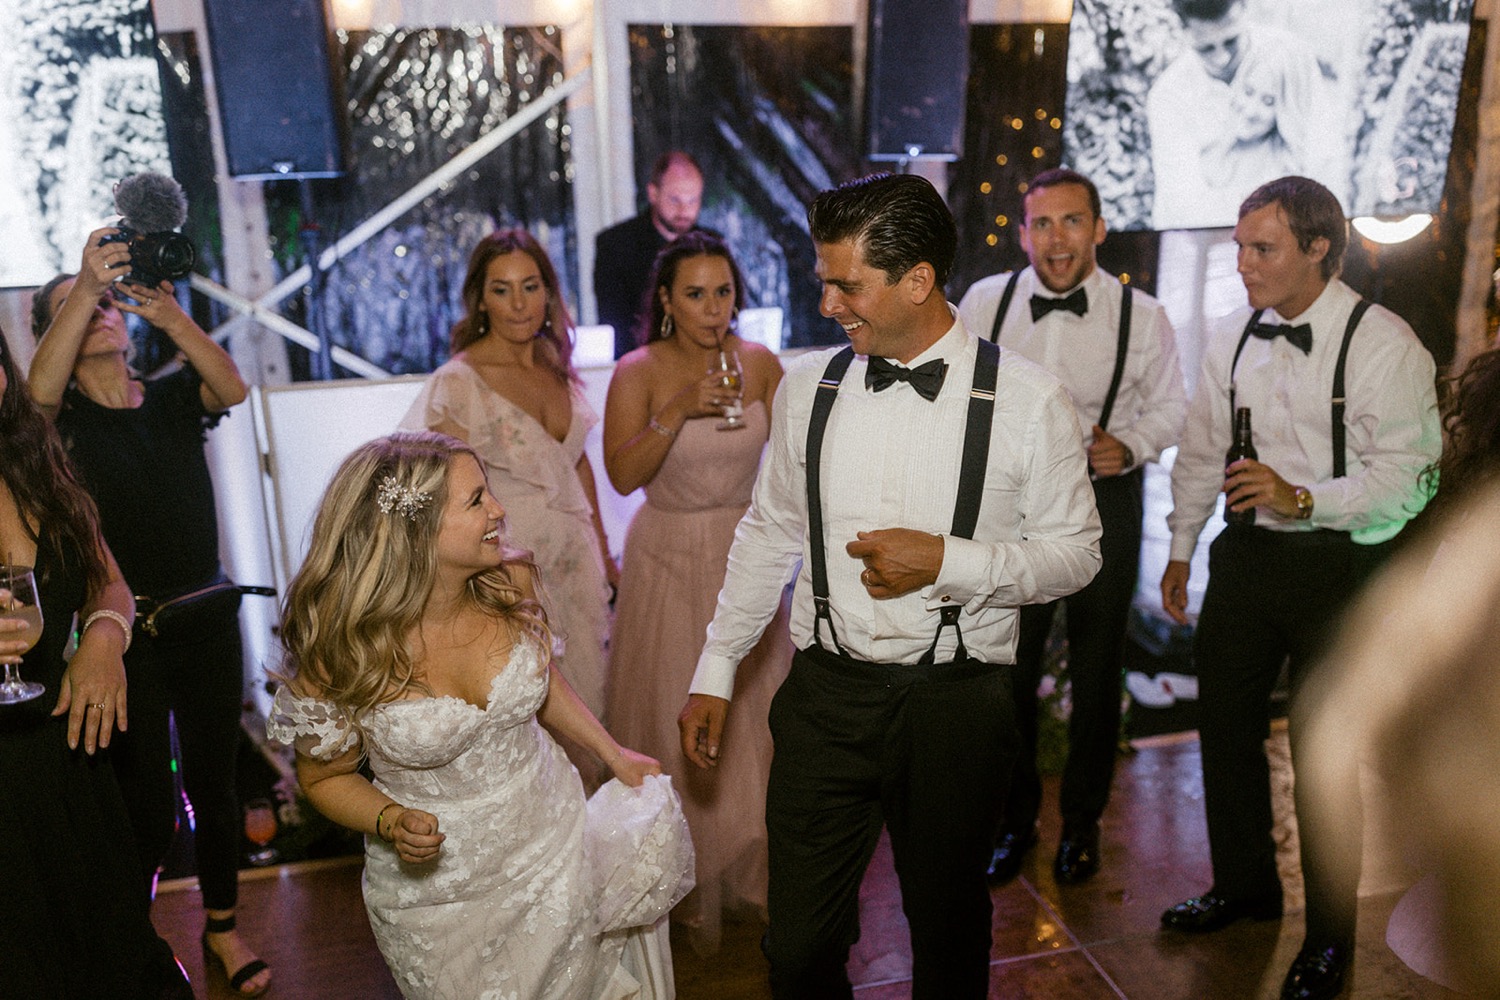 couple dancing fun at wedding reception